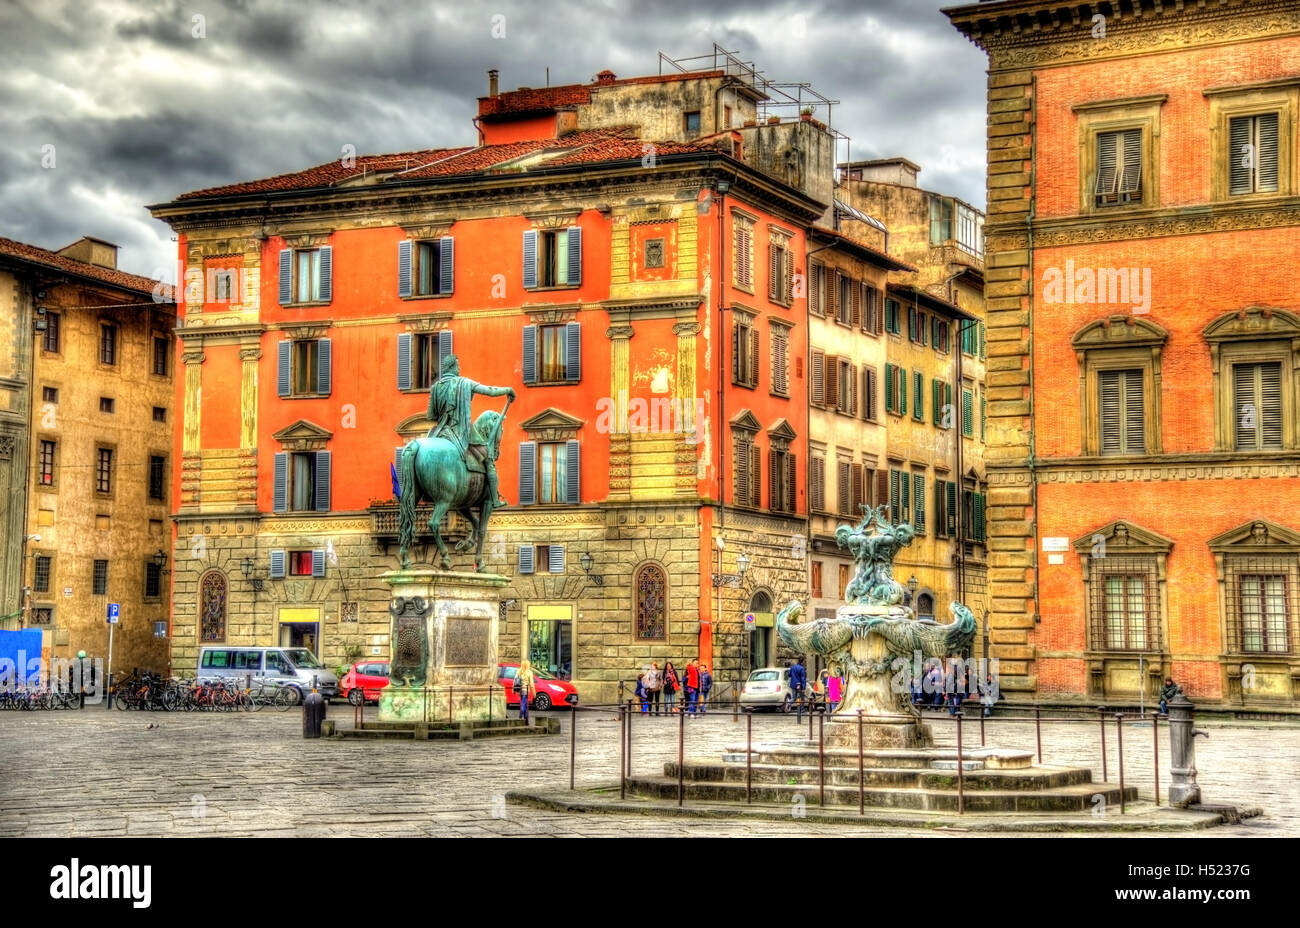 Santissima Annunziata square in Florence - Italy Stock Photo